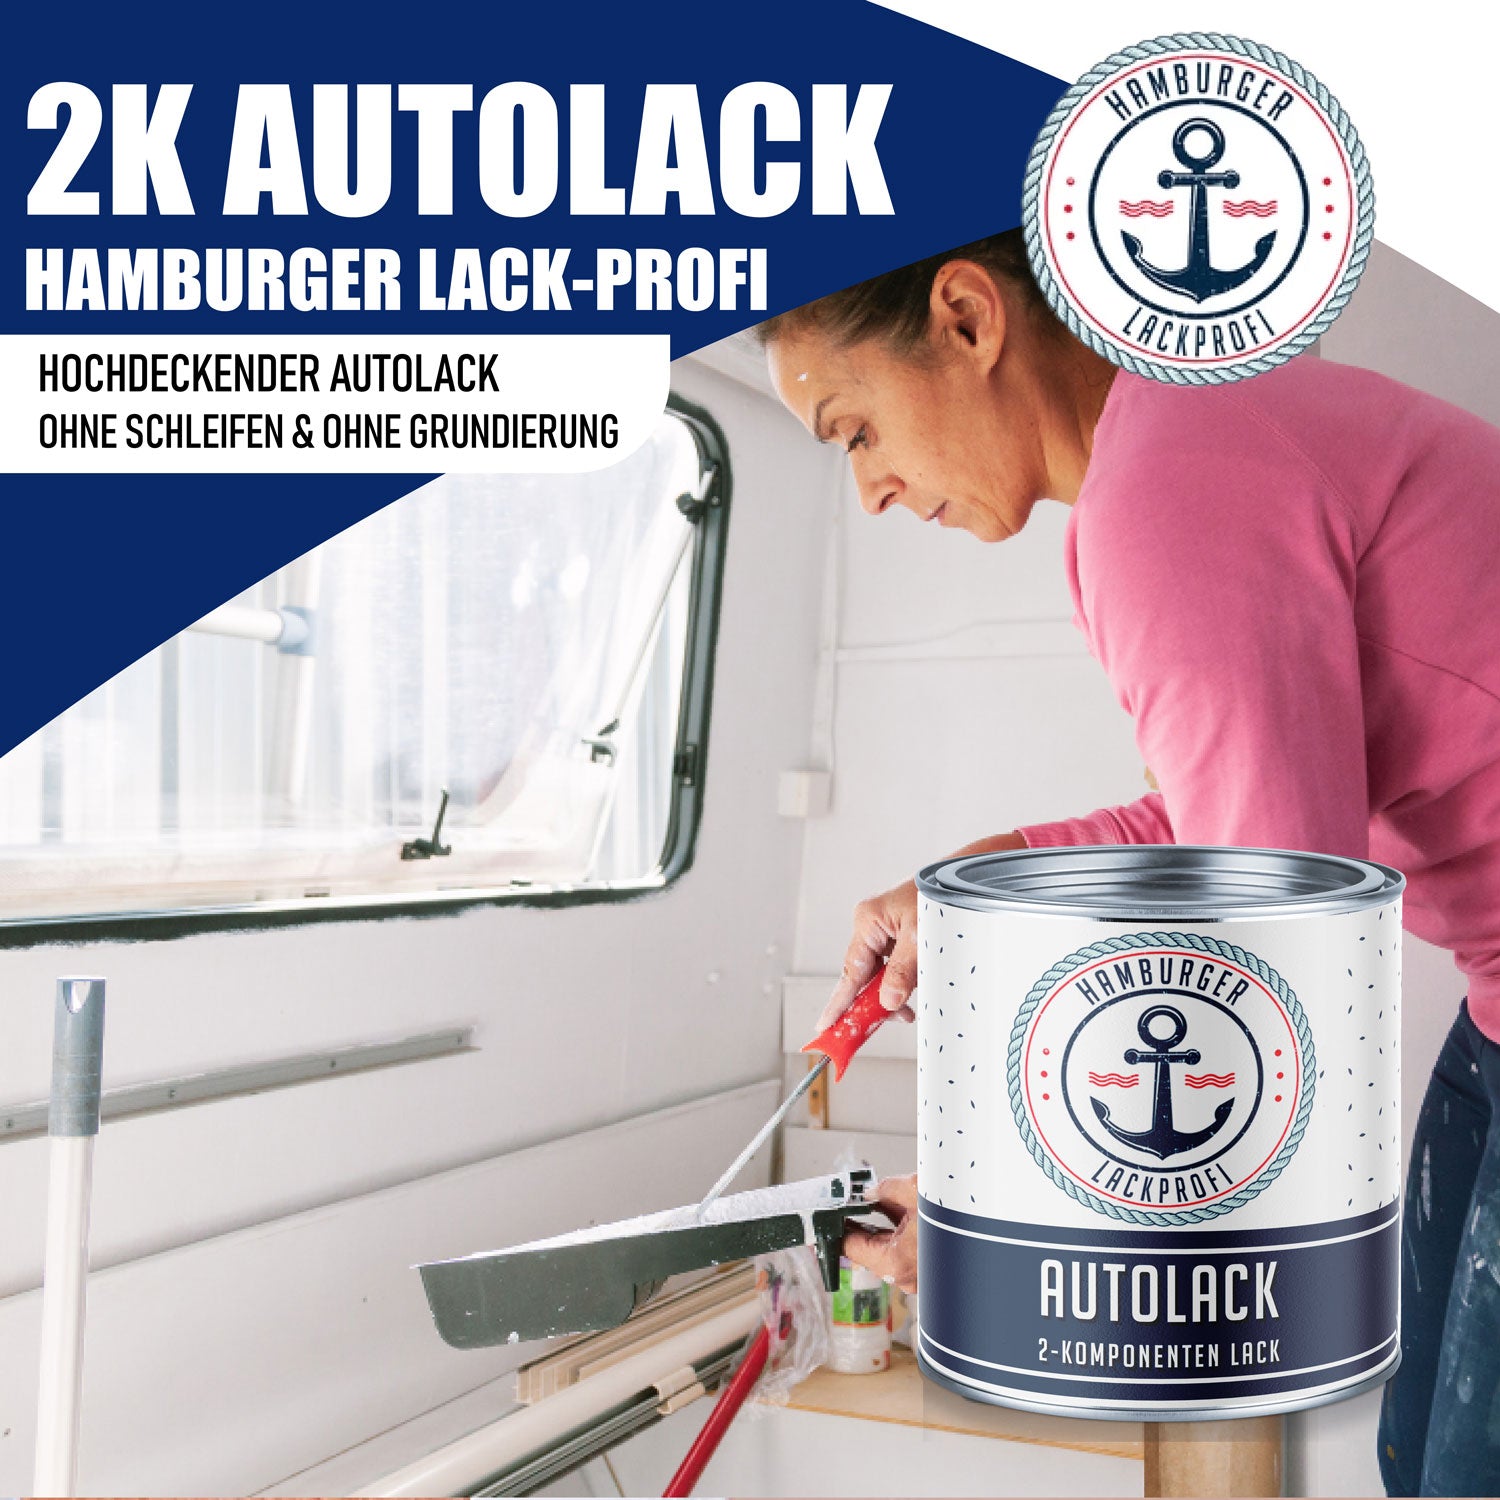 Hamburger Lack-Profi 2K Autolack in Nußbraun RAL 8011 mit Lackierset (X300) & Verdünnung (1 L) - 30% Sparangebot